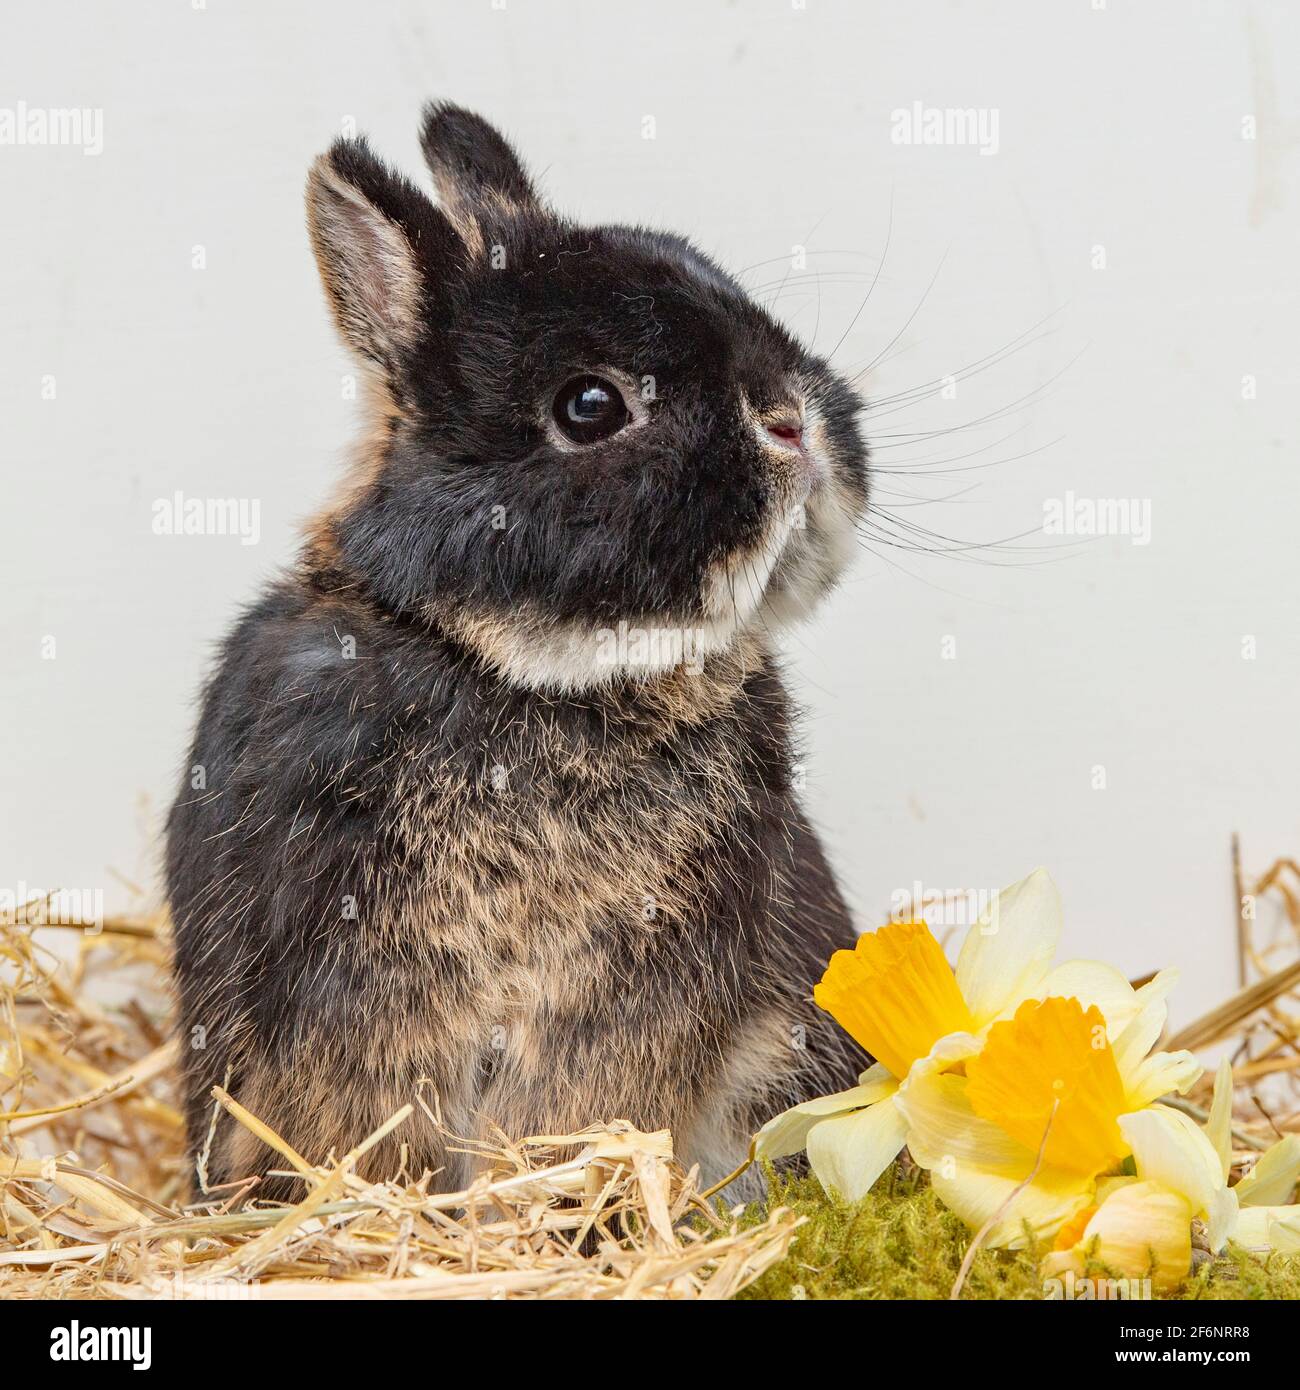 Netherland Dwarf Rabbit Foto de stock